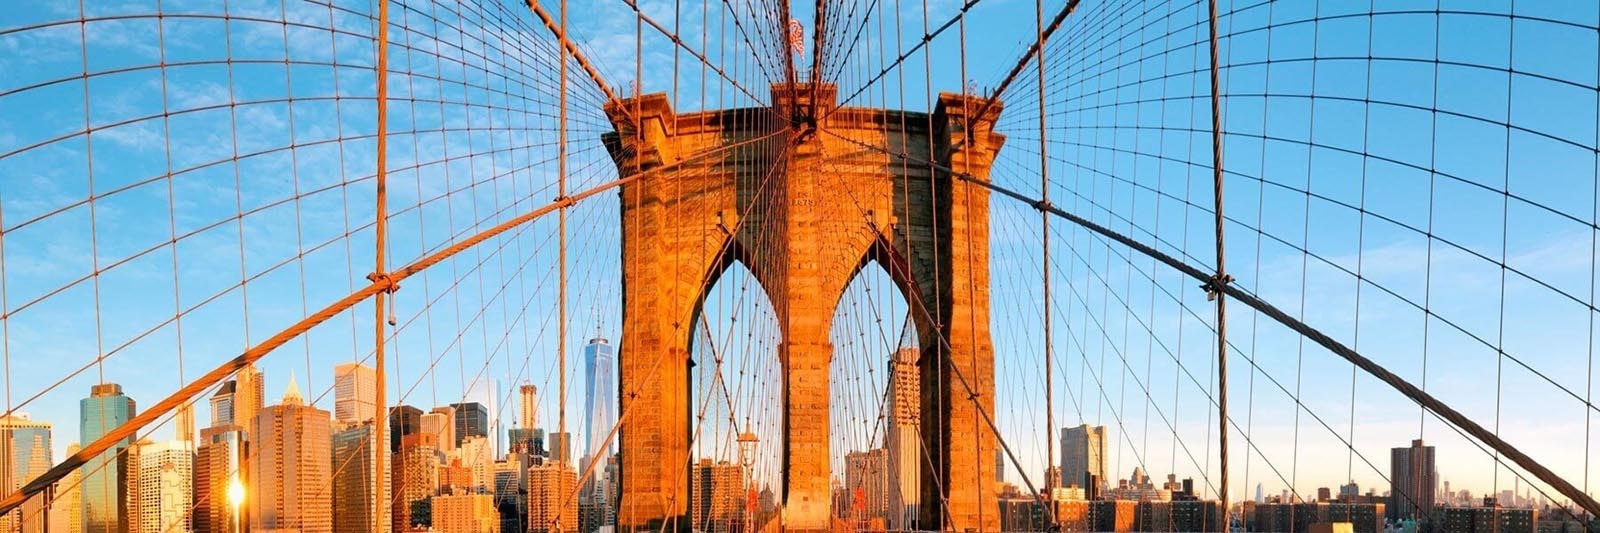 New York on the Brooklyn Bridge